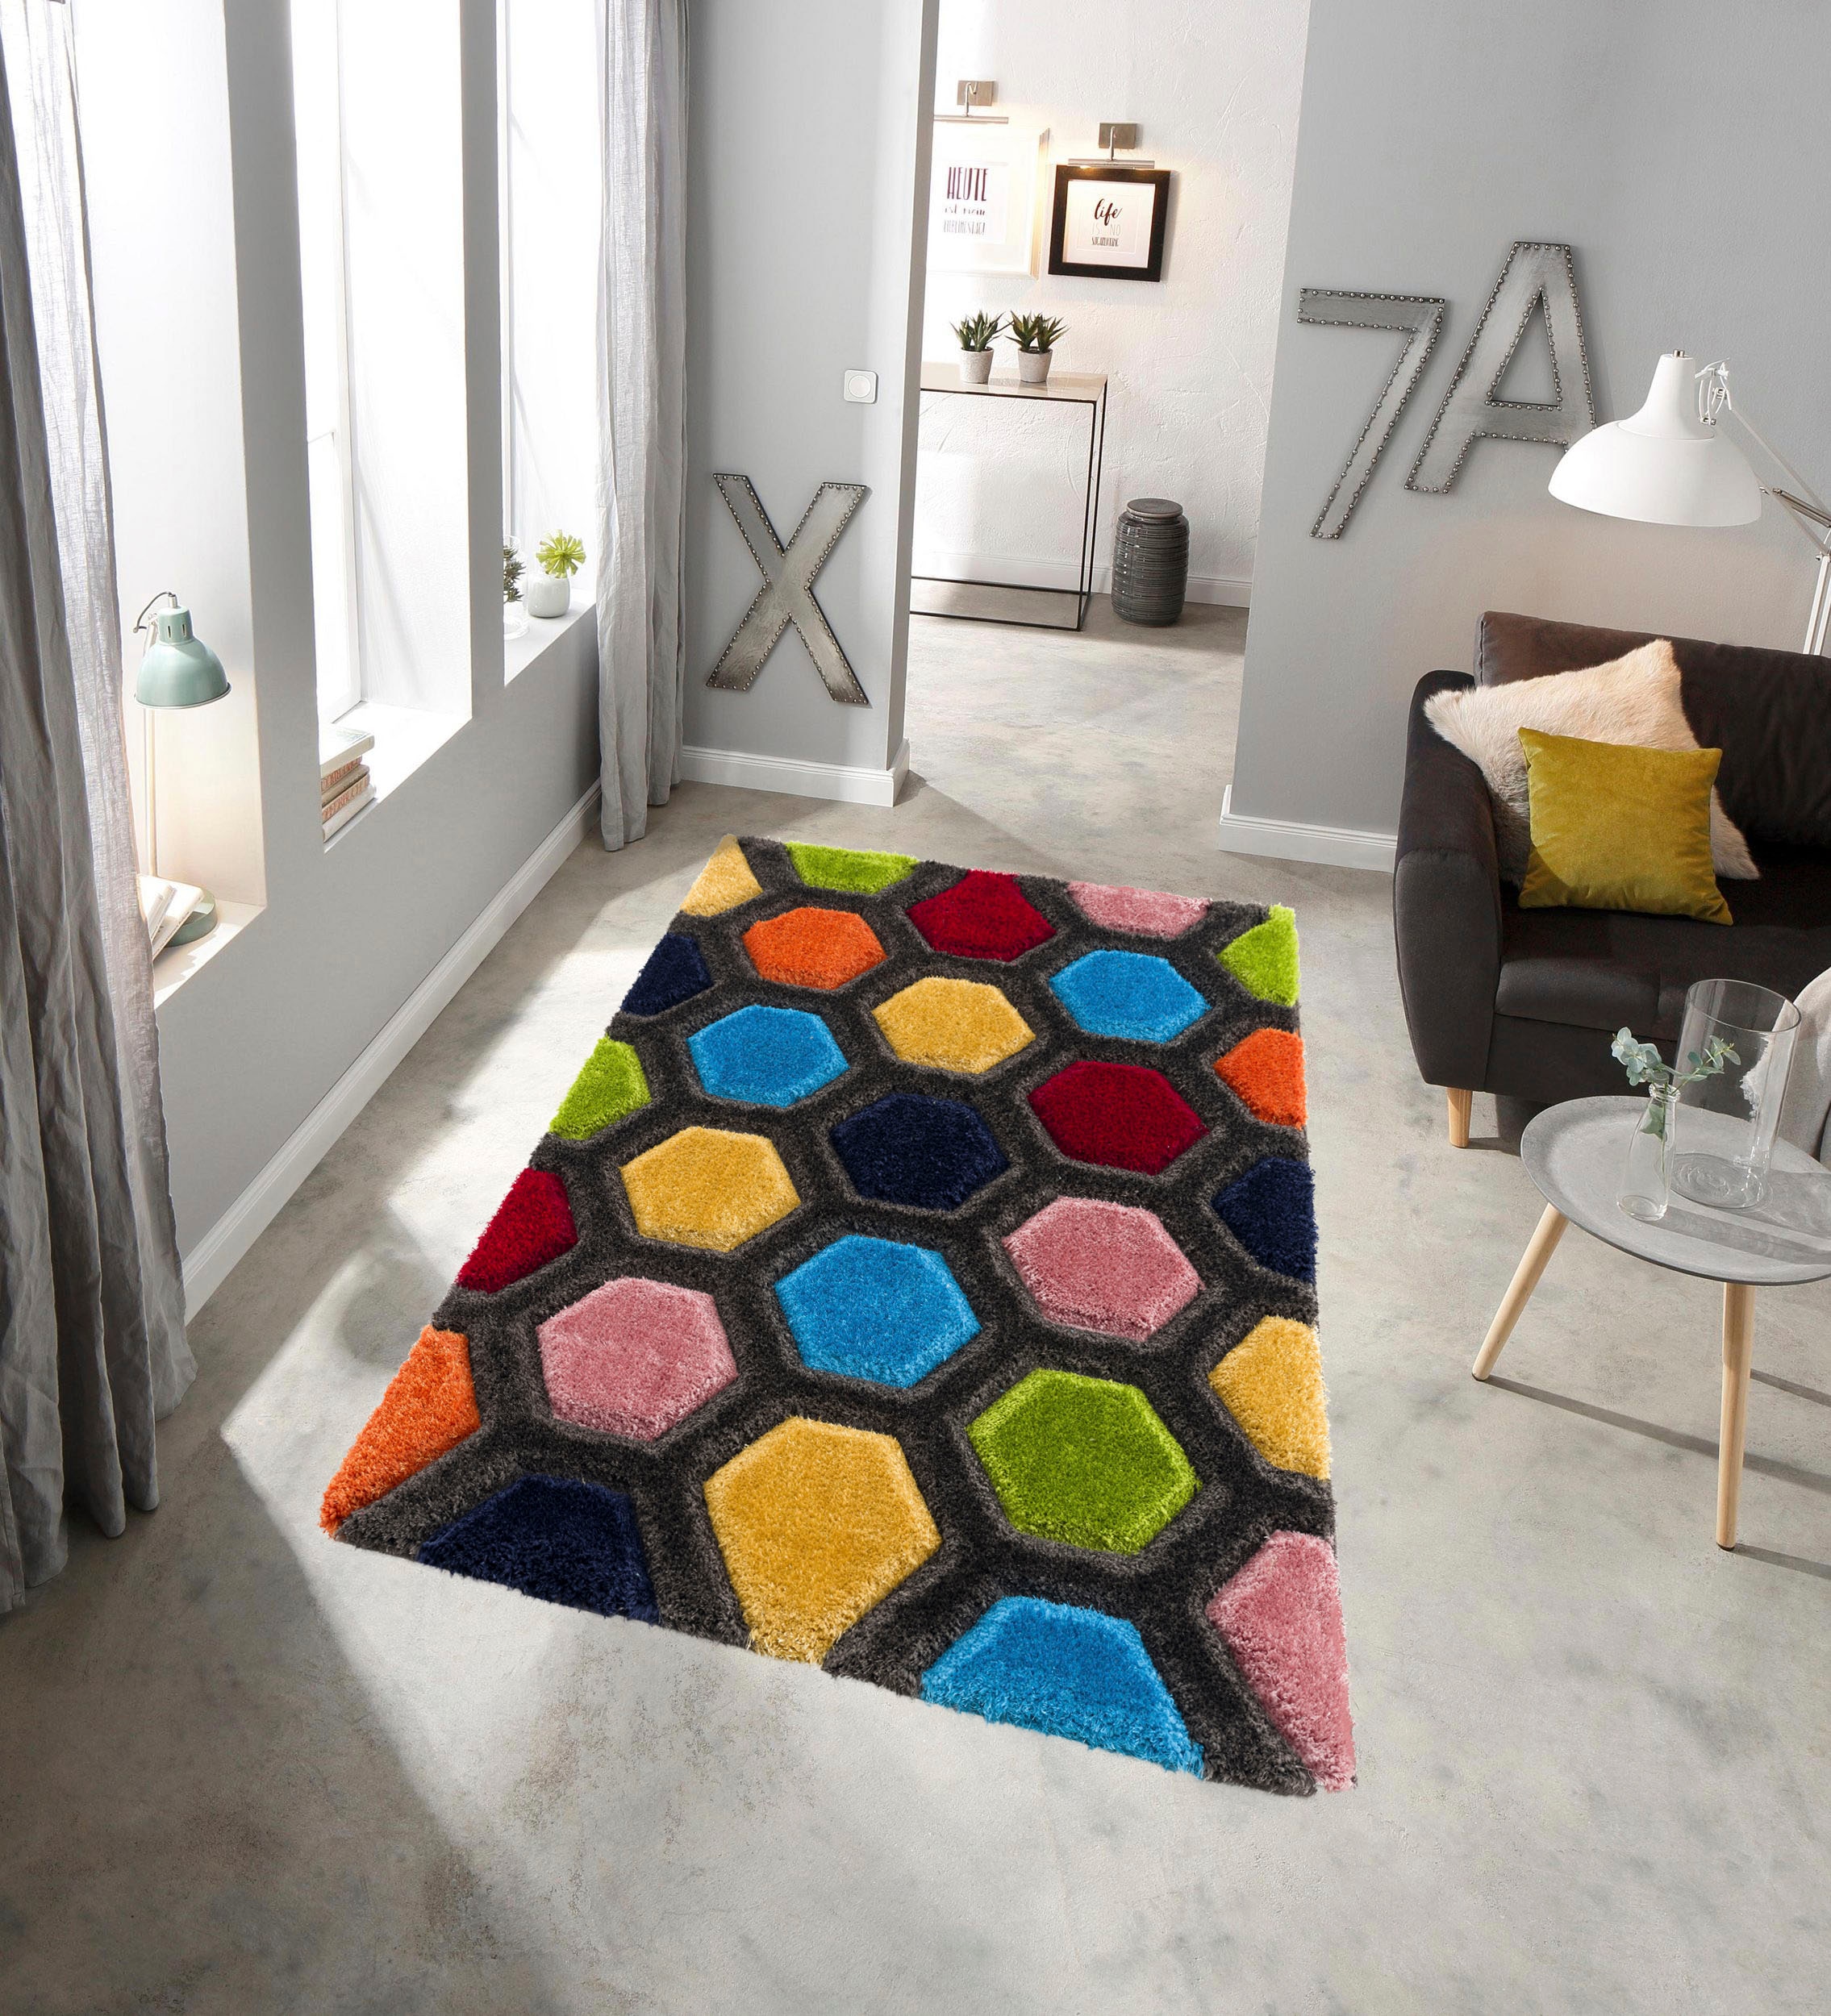 my home Teppich Hochflor-Teppich rechteckig, modernes 3D-Design, »Bras«, bunter